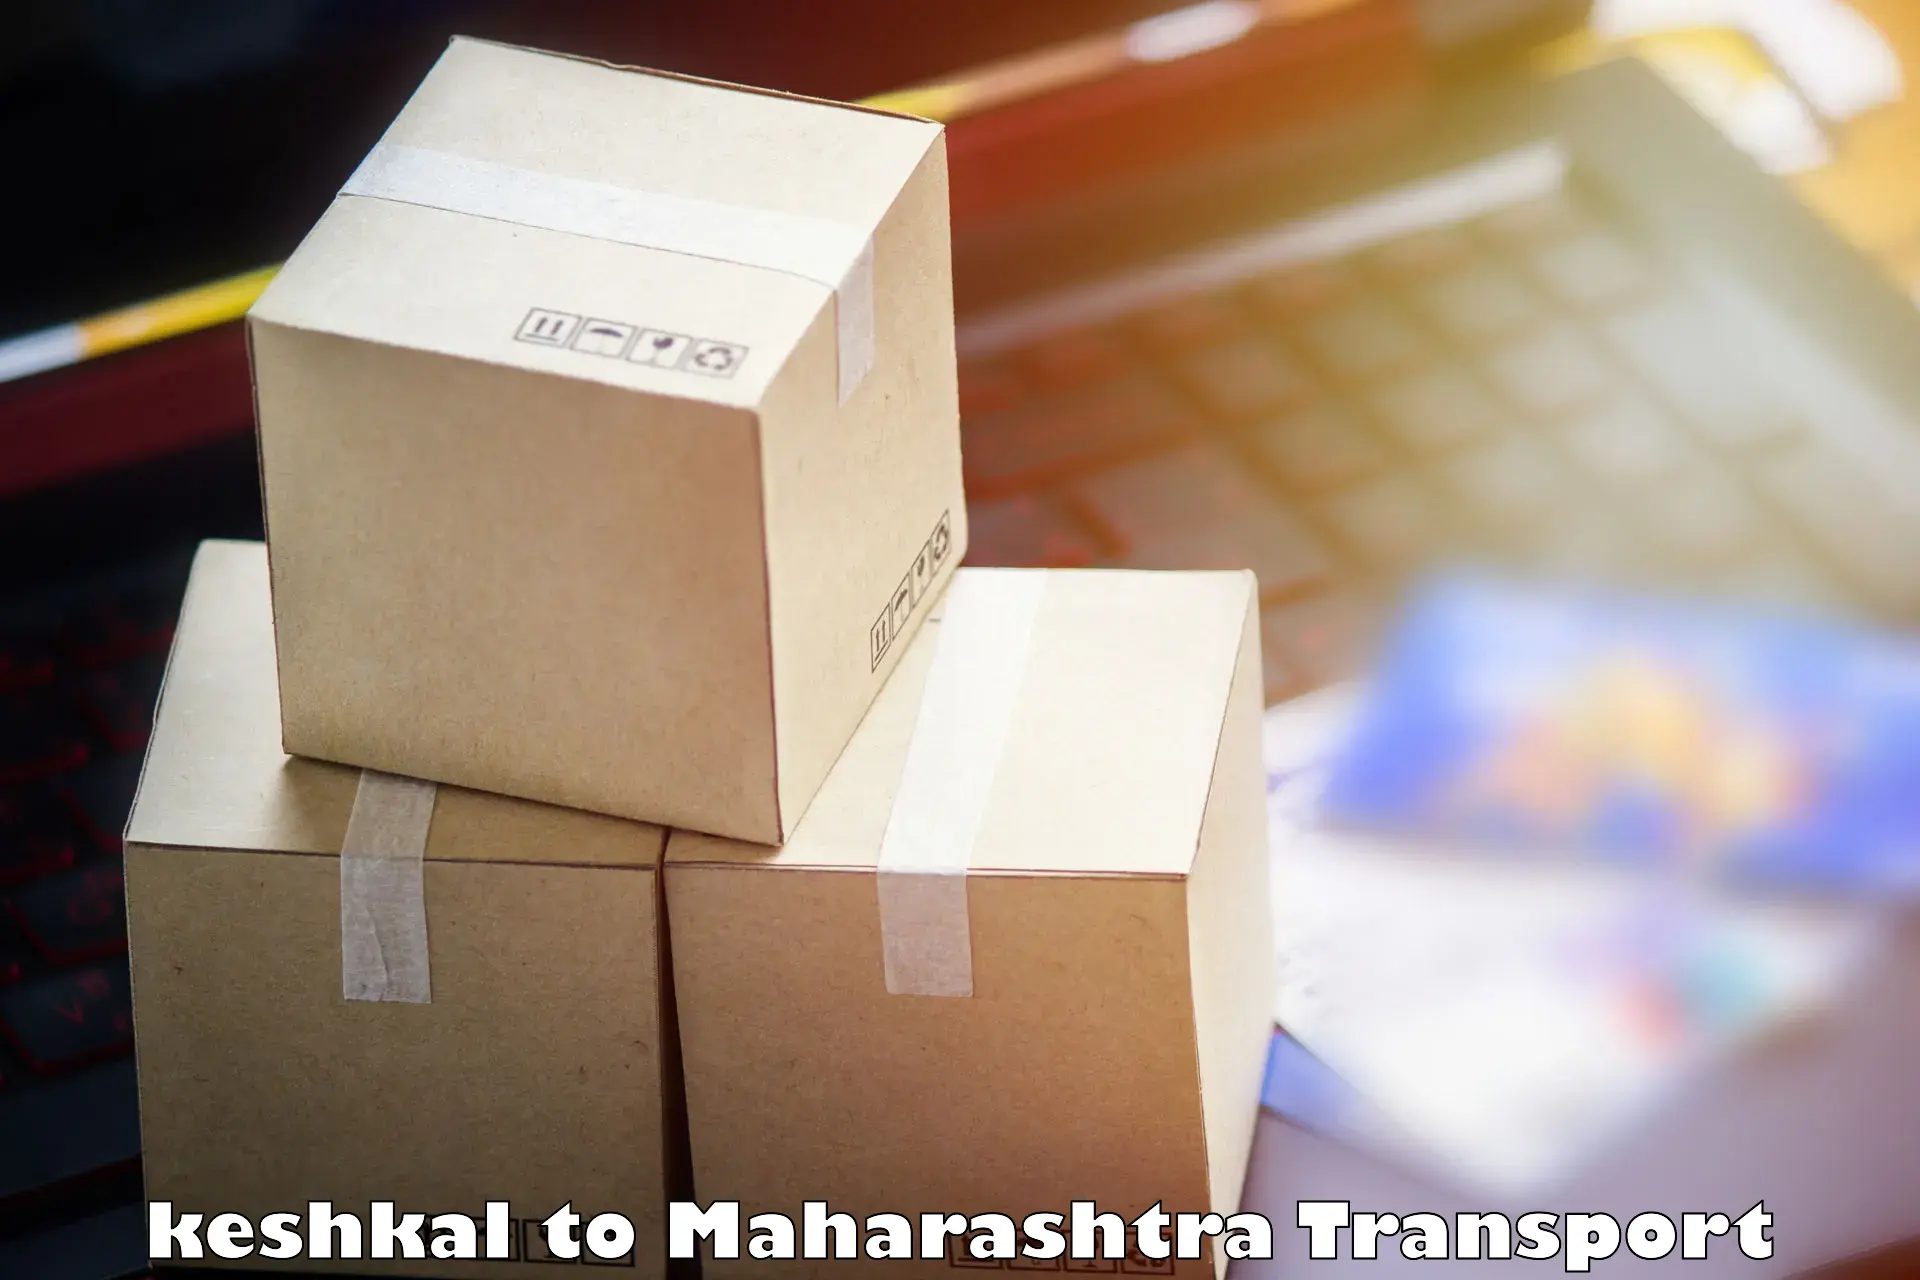 Furniture transport service keshkal to Ambarnath